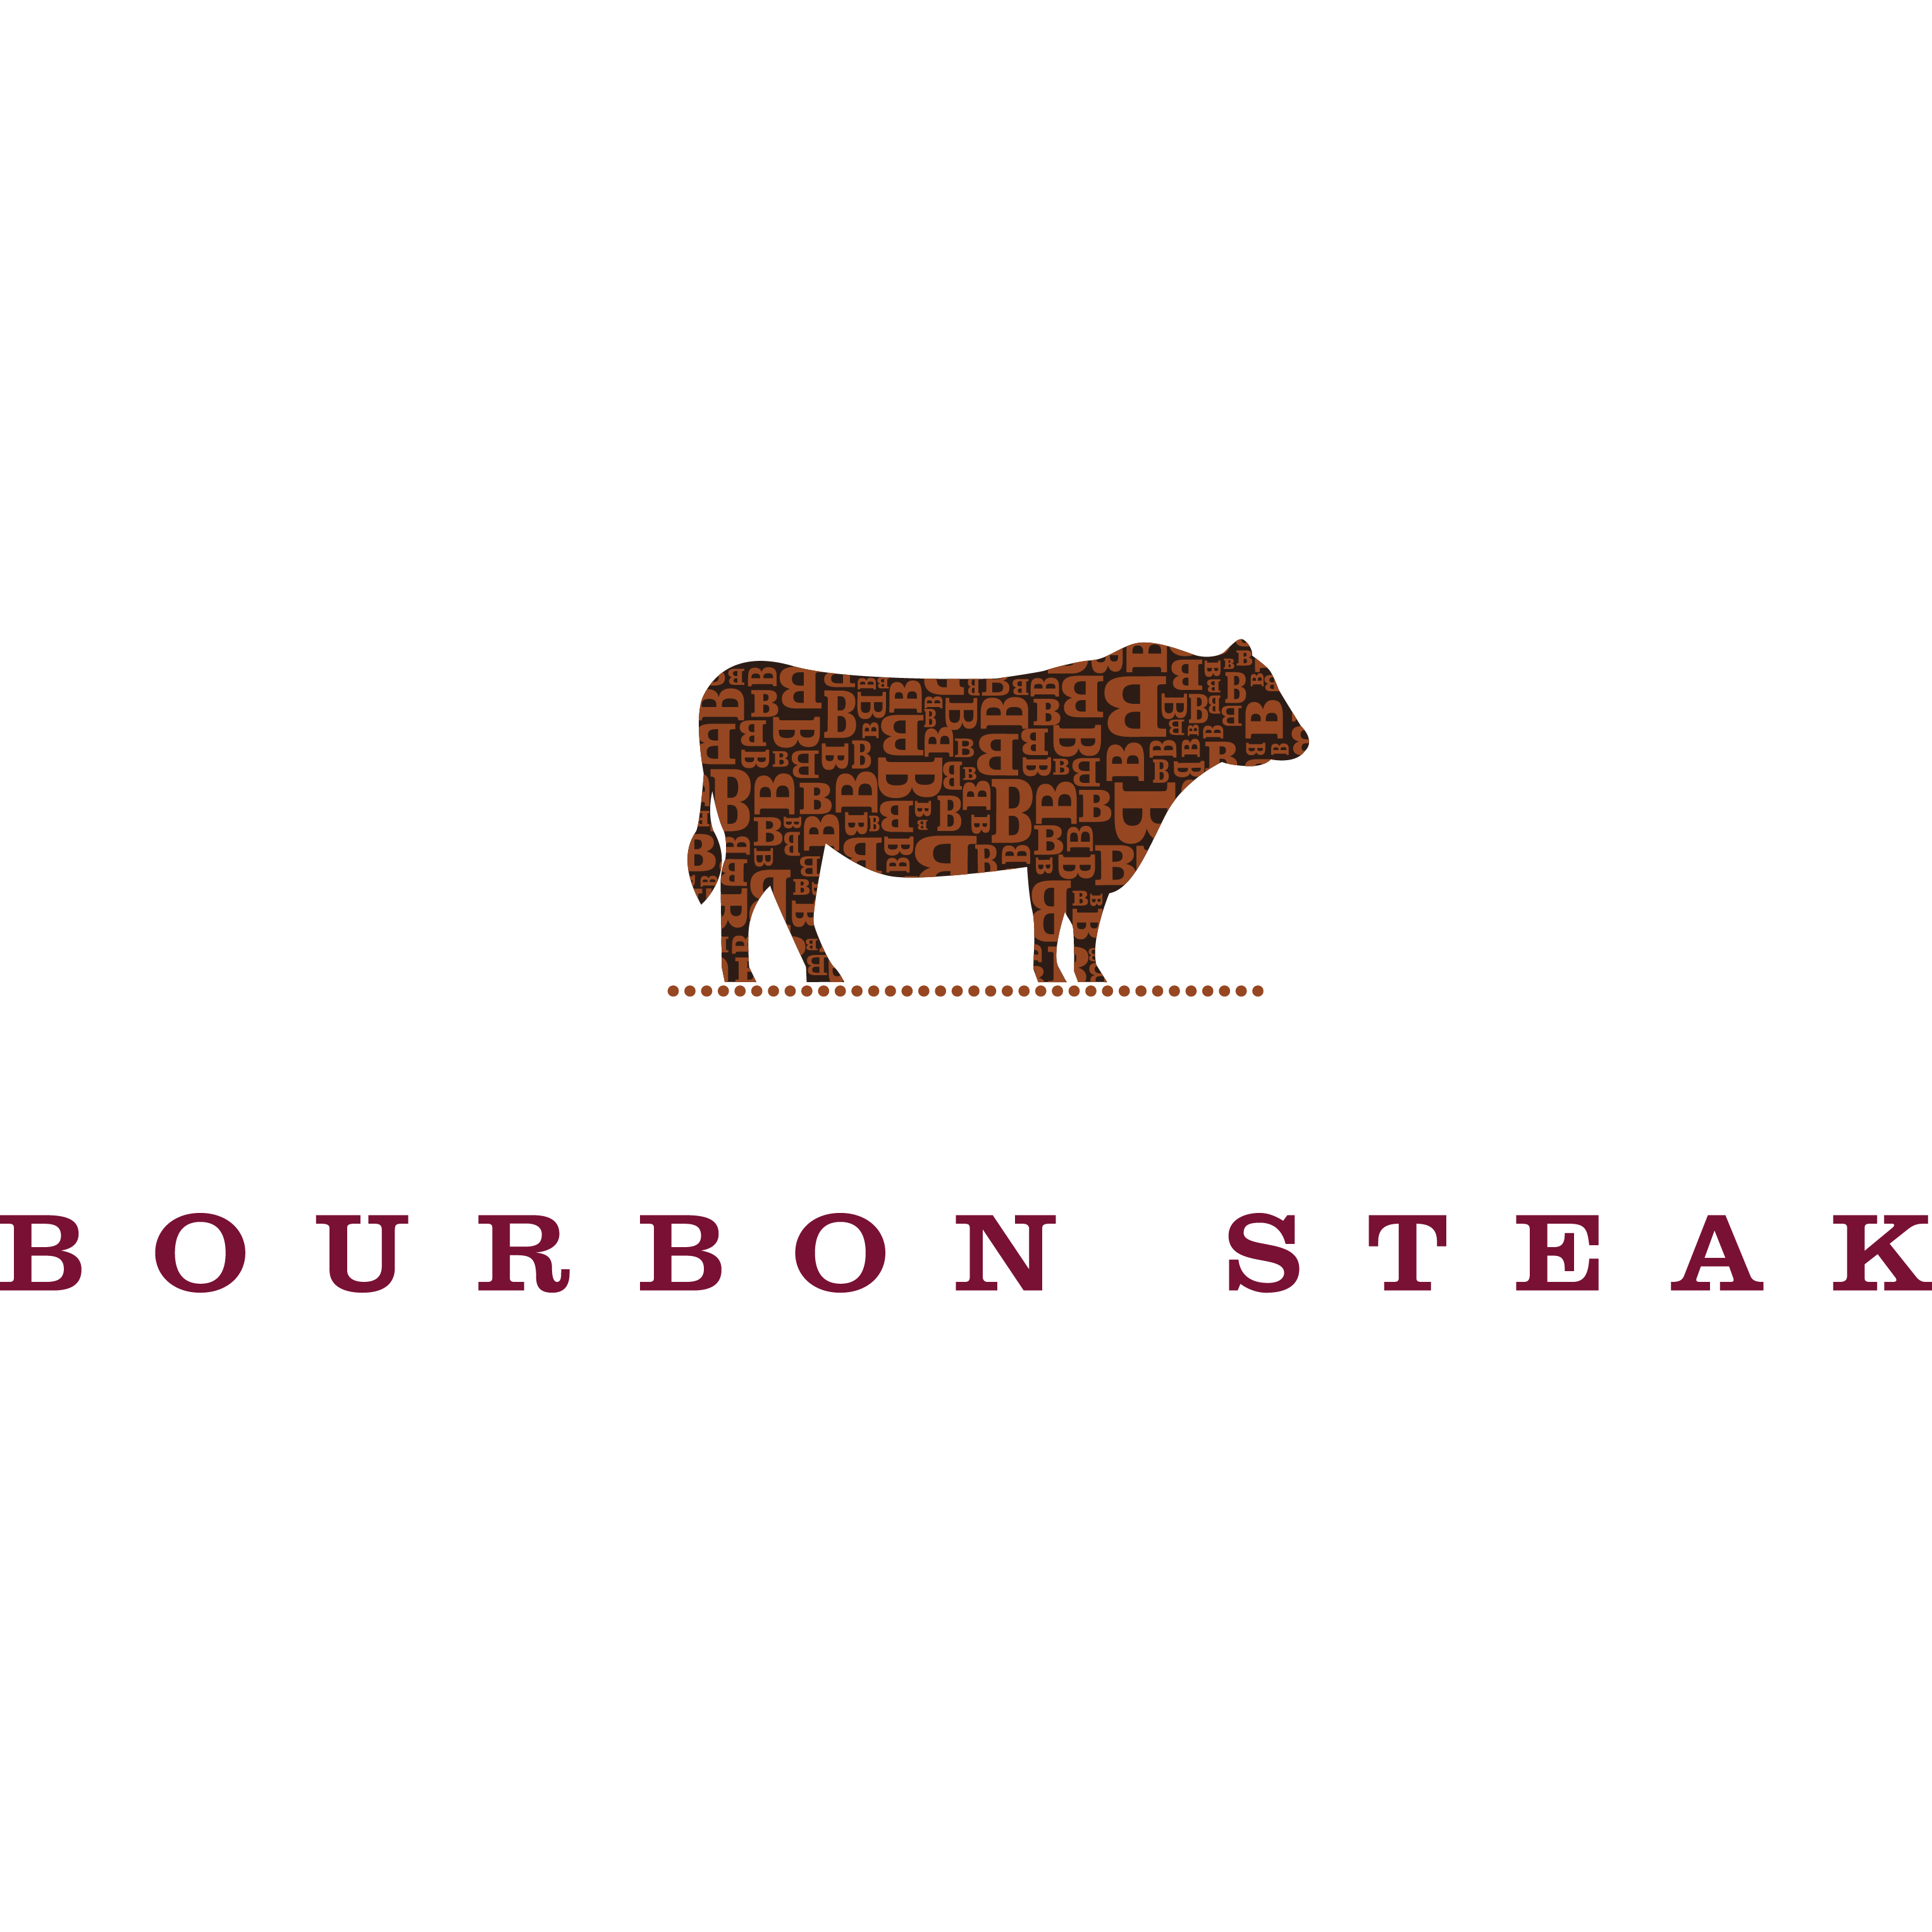 Bourbon Steak Los Angeles